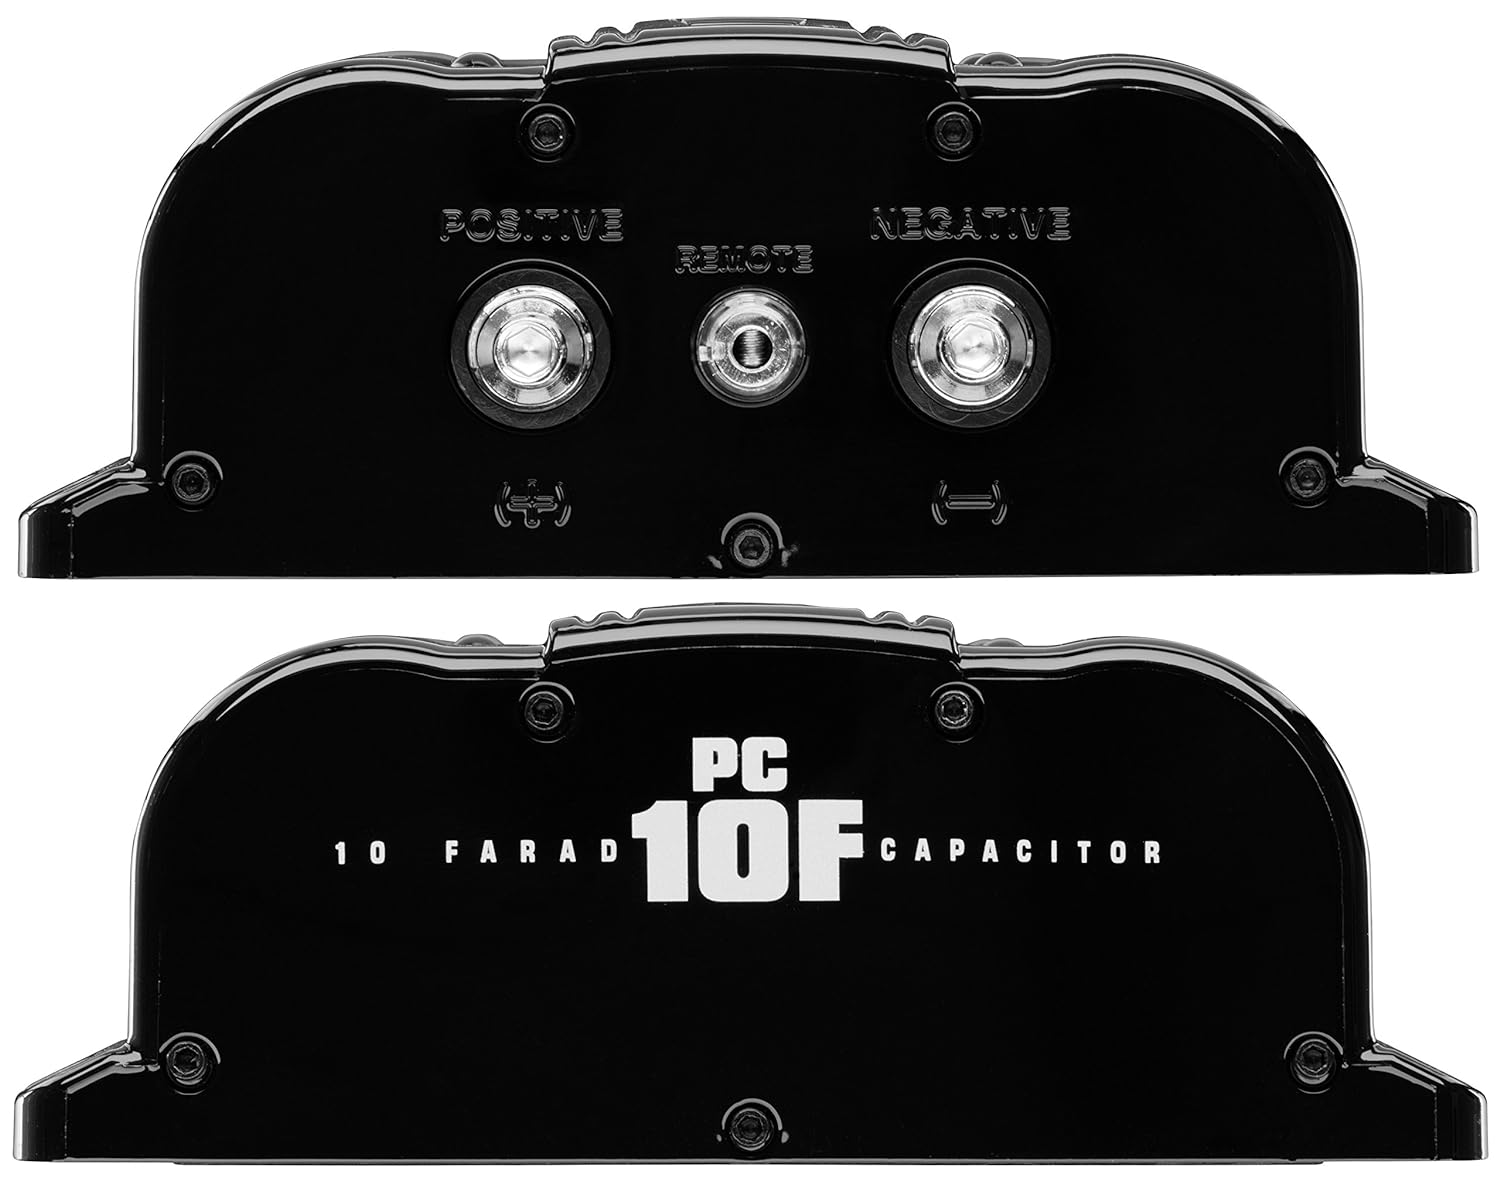 Planet Audio PC10F - $70